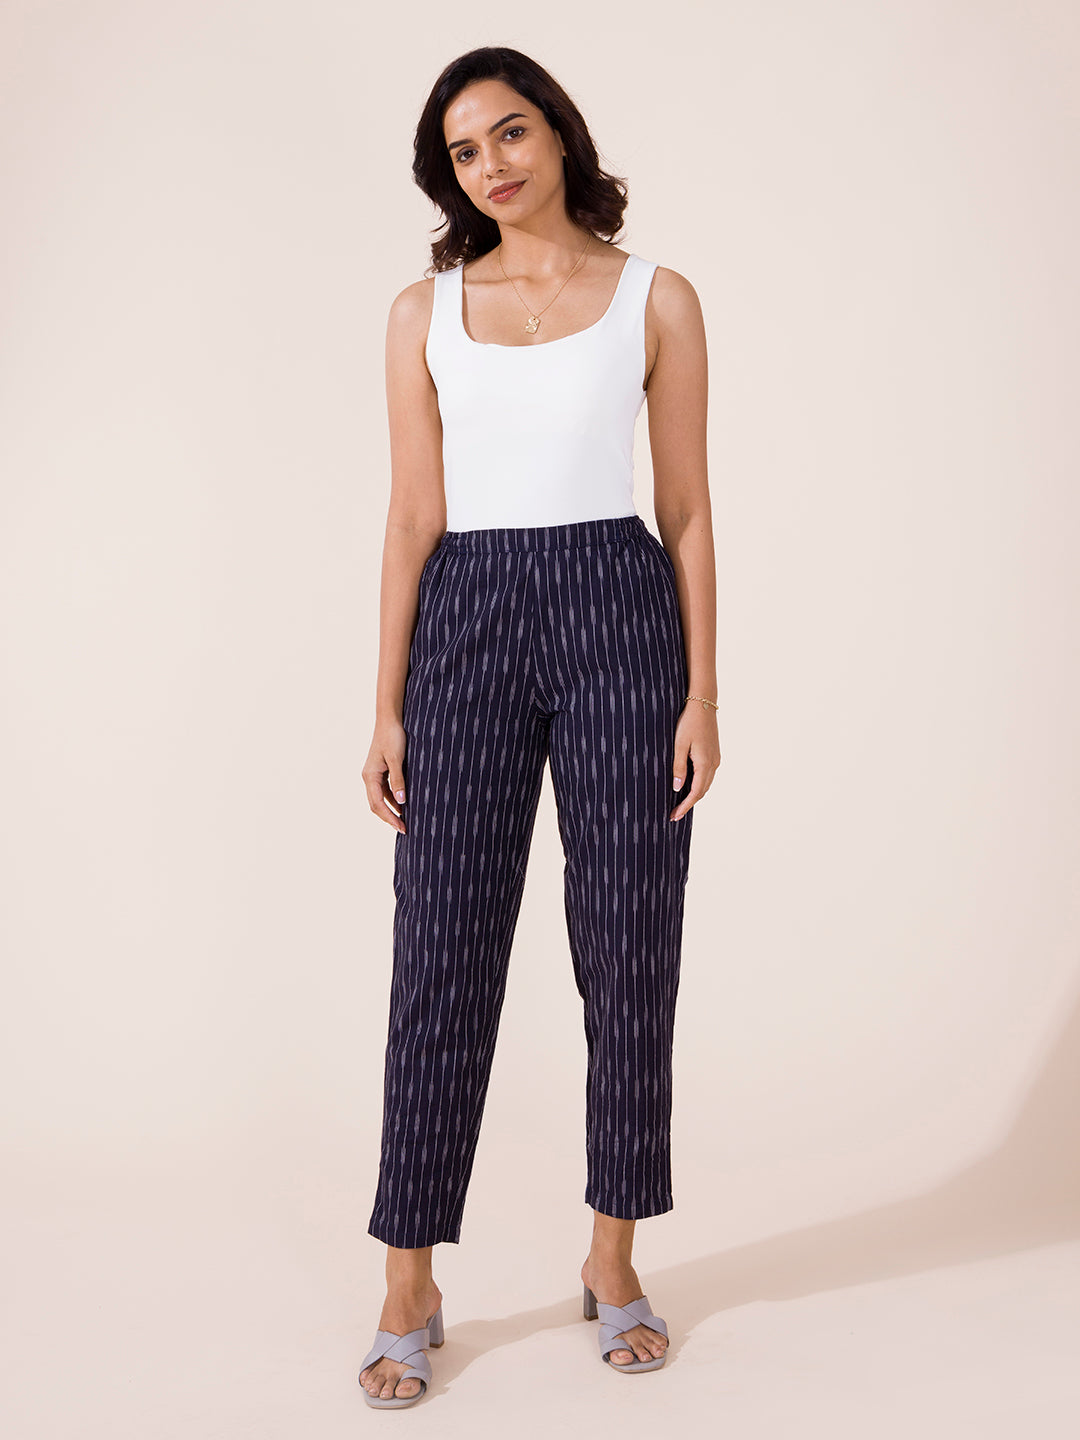 Lady Ankle-length Pencil Pants Trouser Shiny Imitation Silk Satin Casual  Fashion | eBay